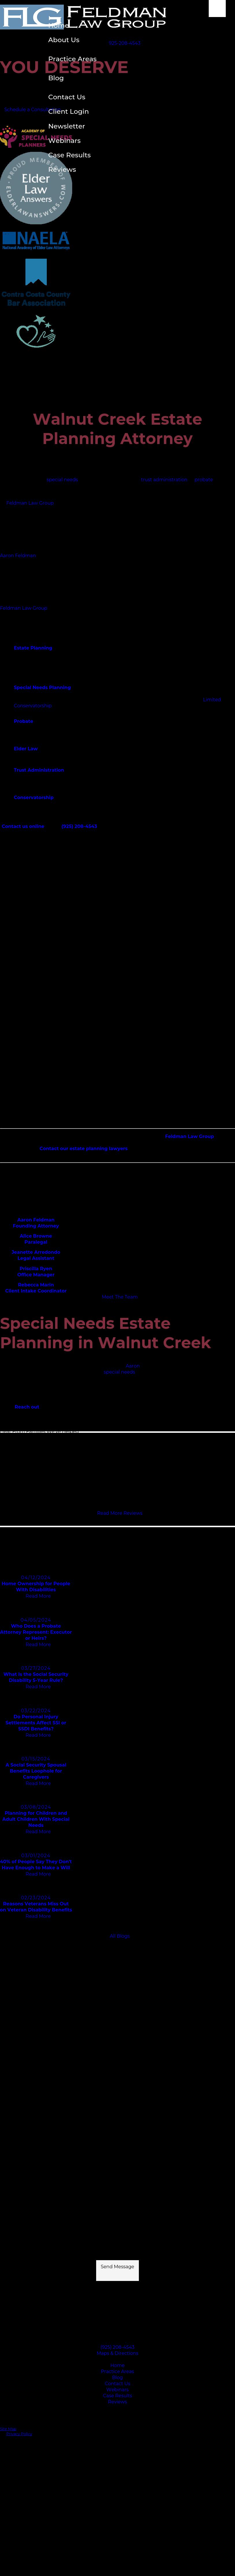 Feldman Law Group - Walnut Creek CA Lawyers